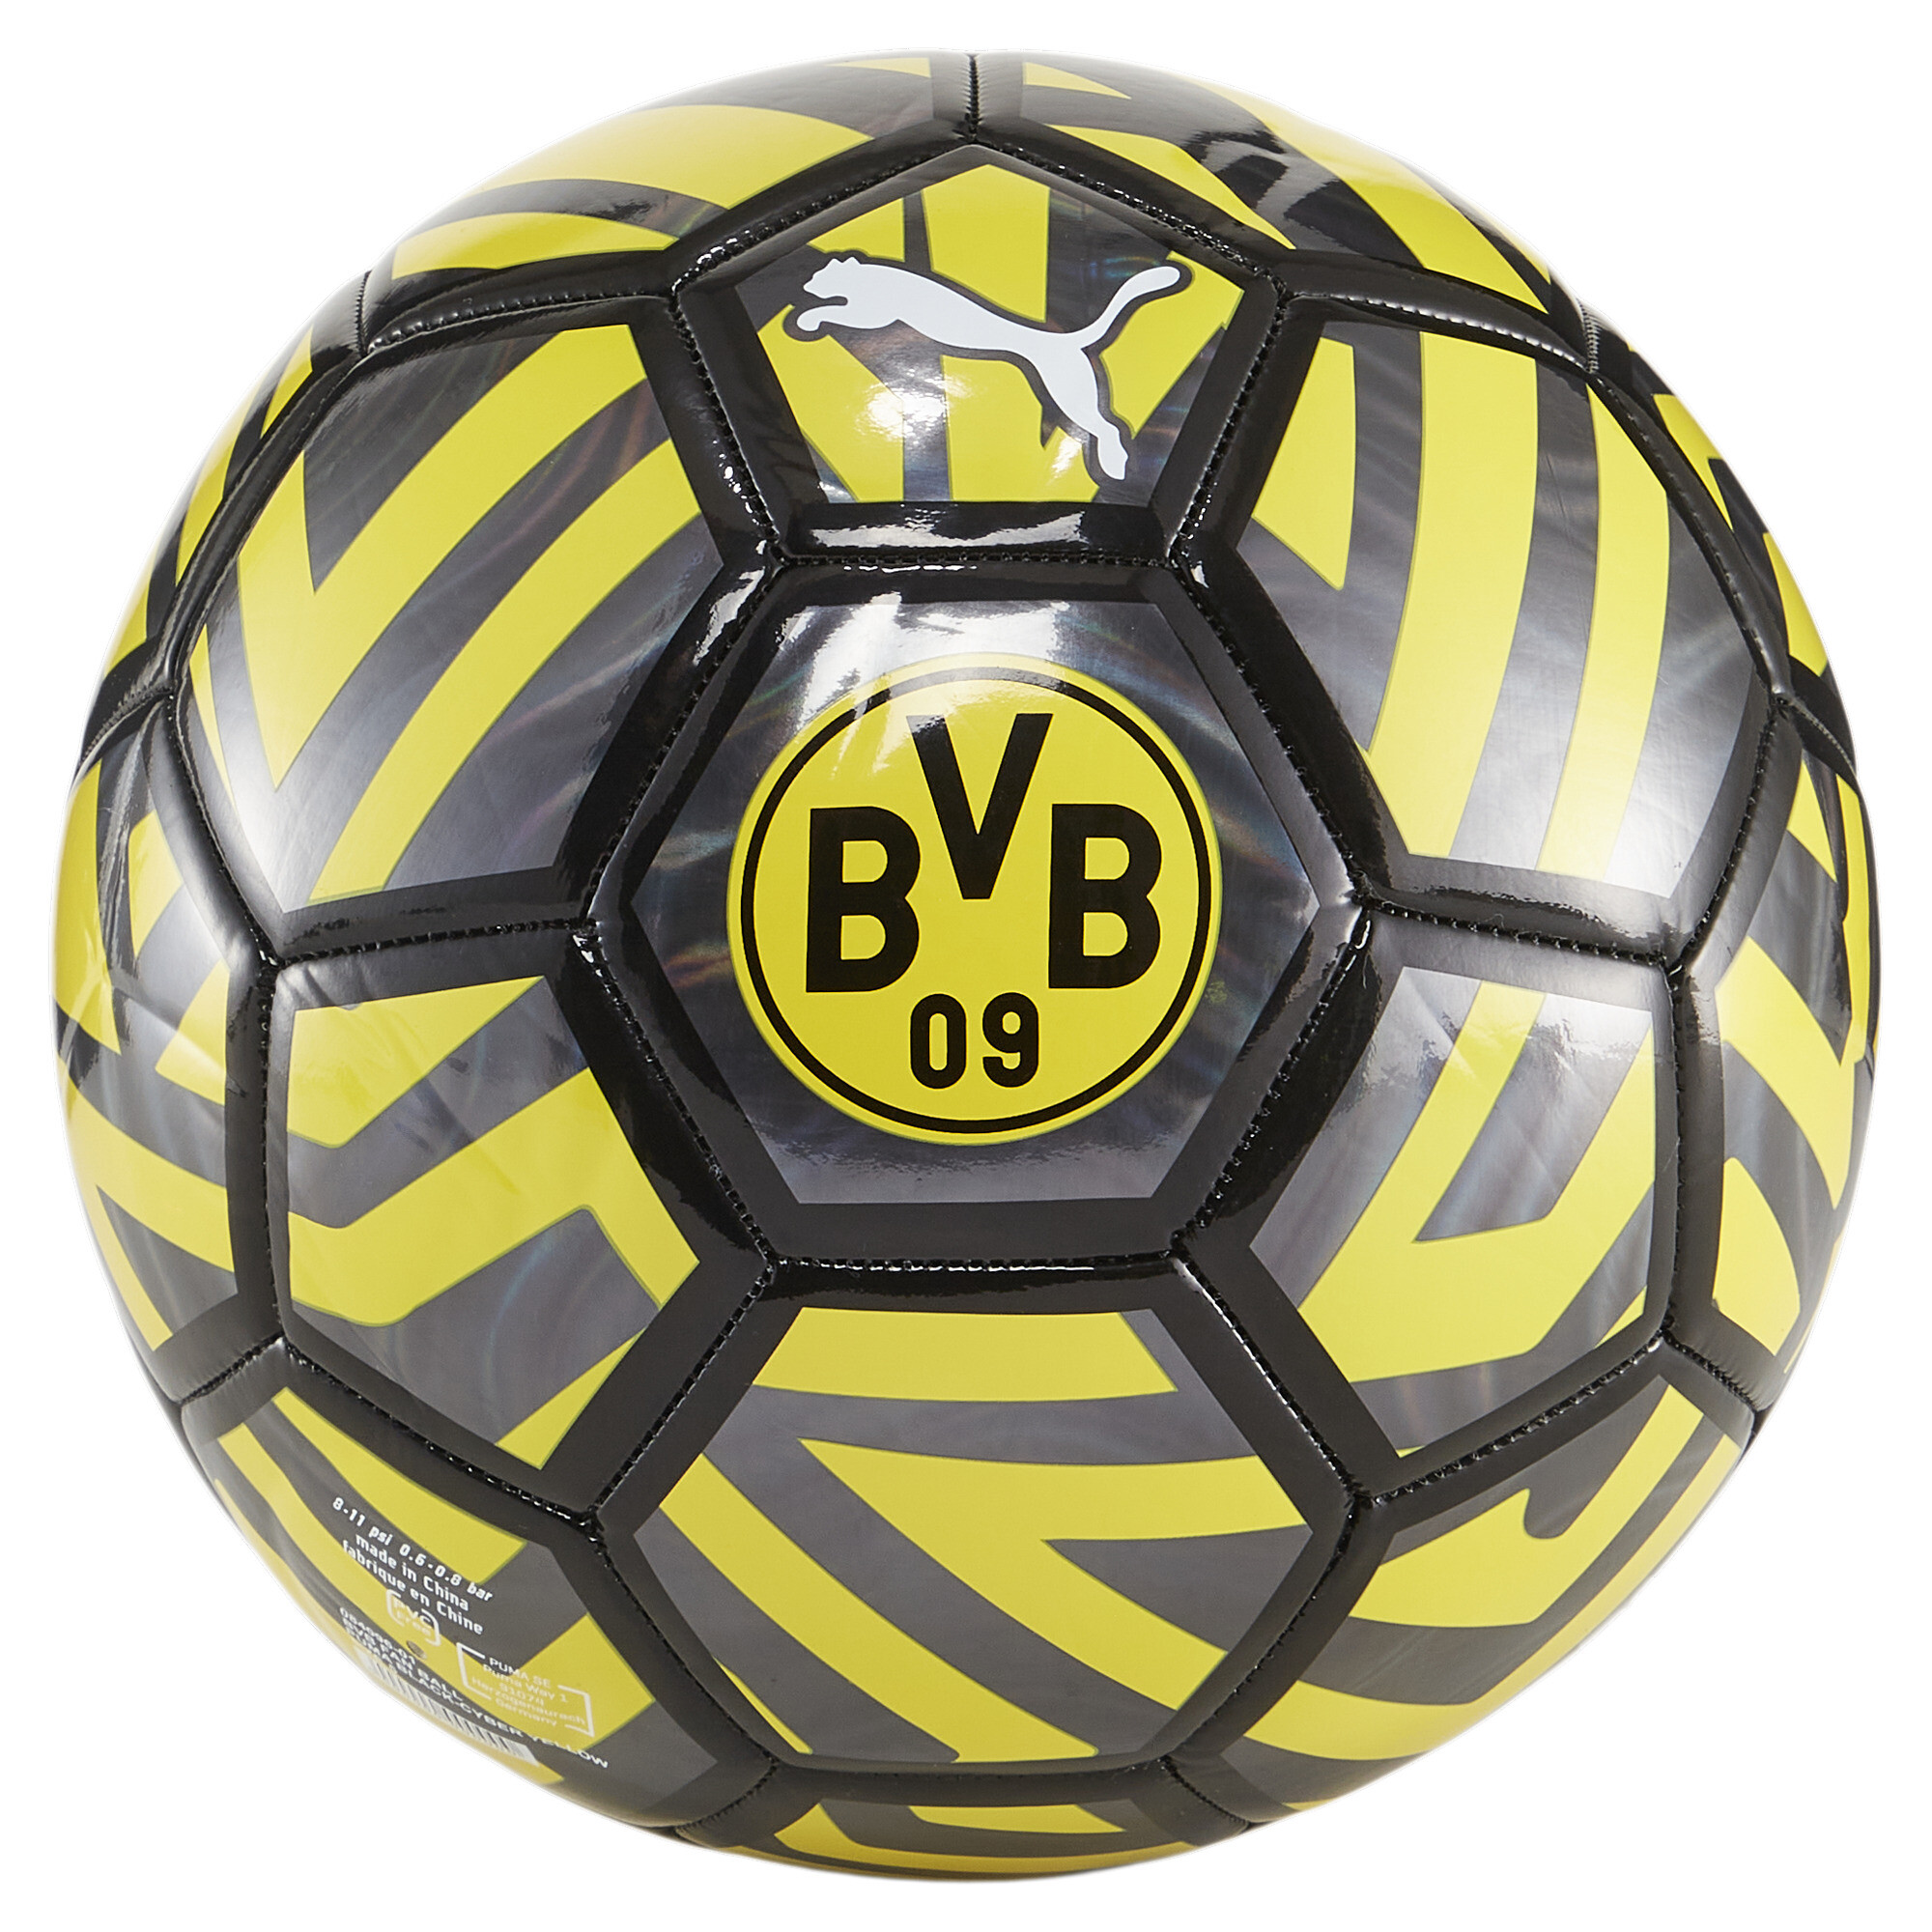 Puma Borussia Dortmund Fan Football, Black, Size 5, Accessories